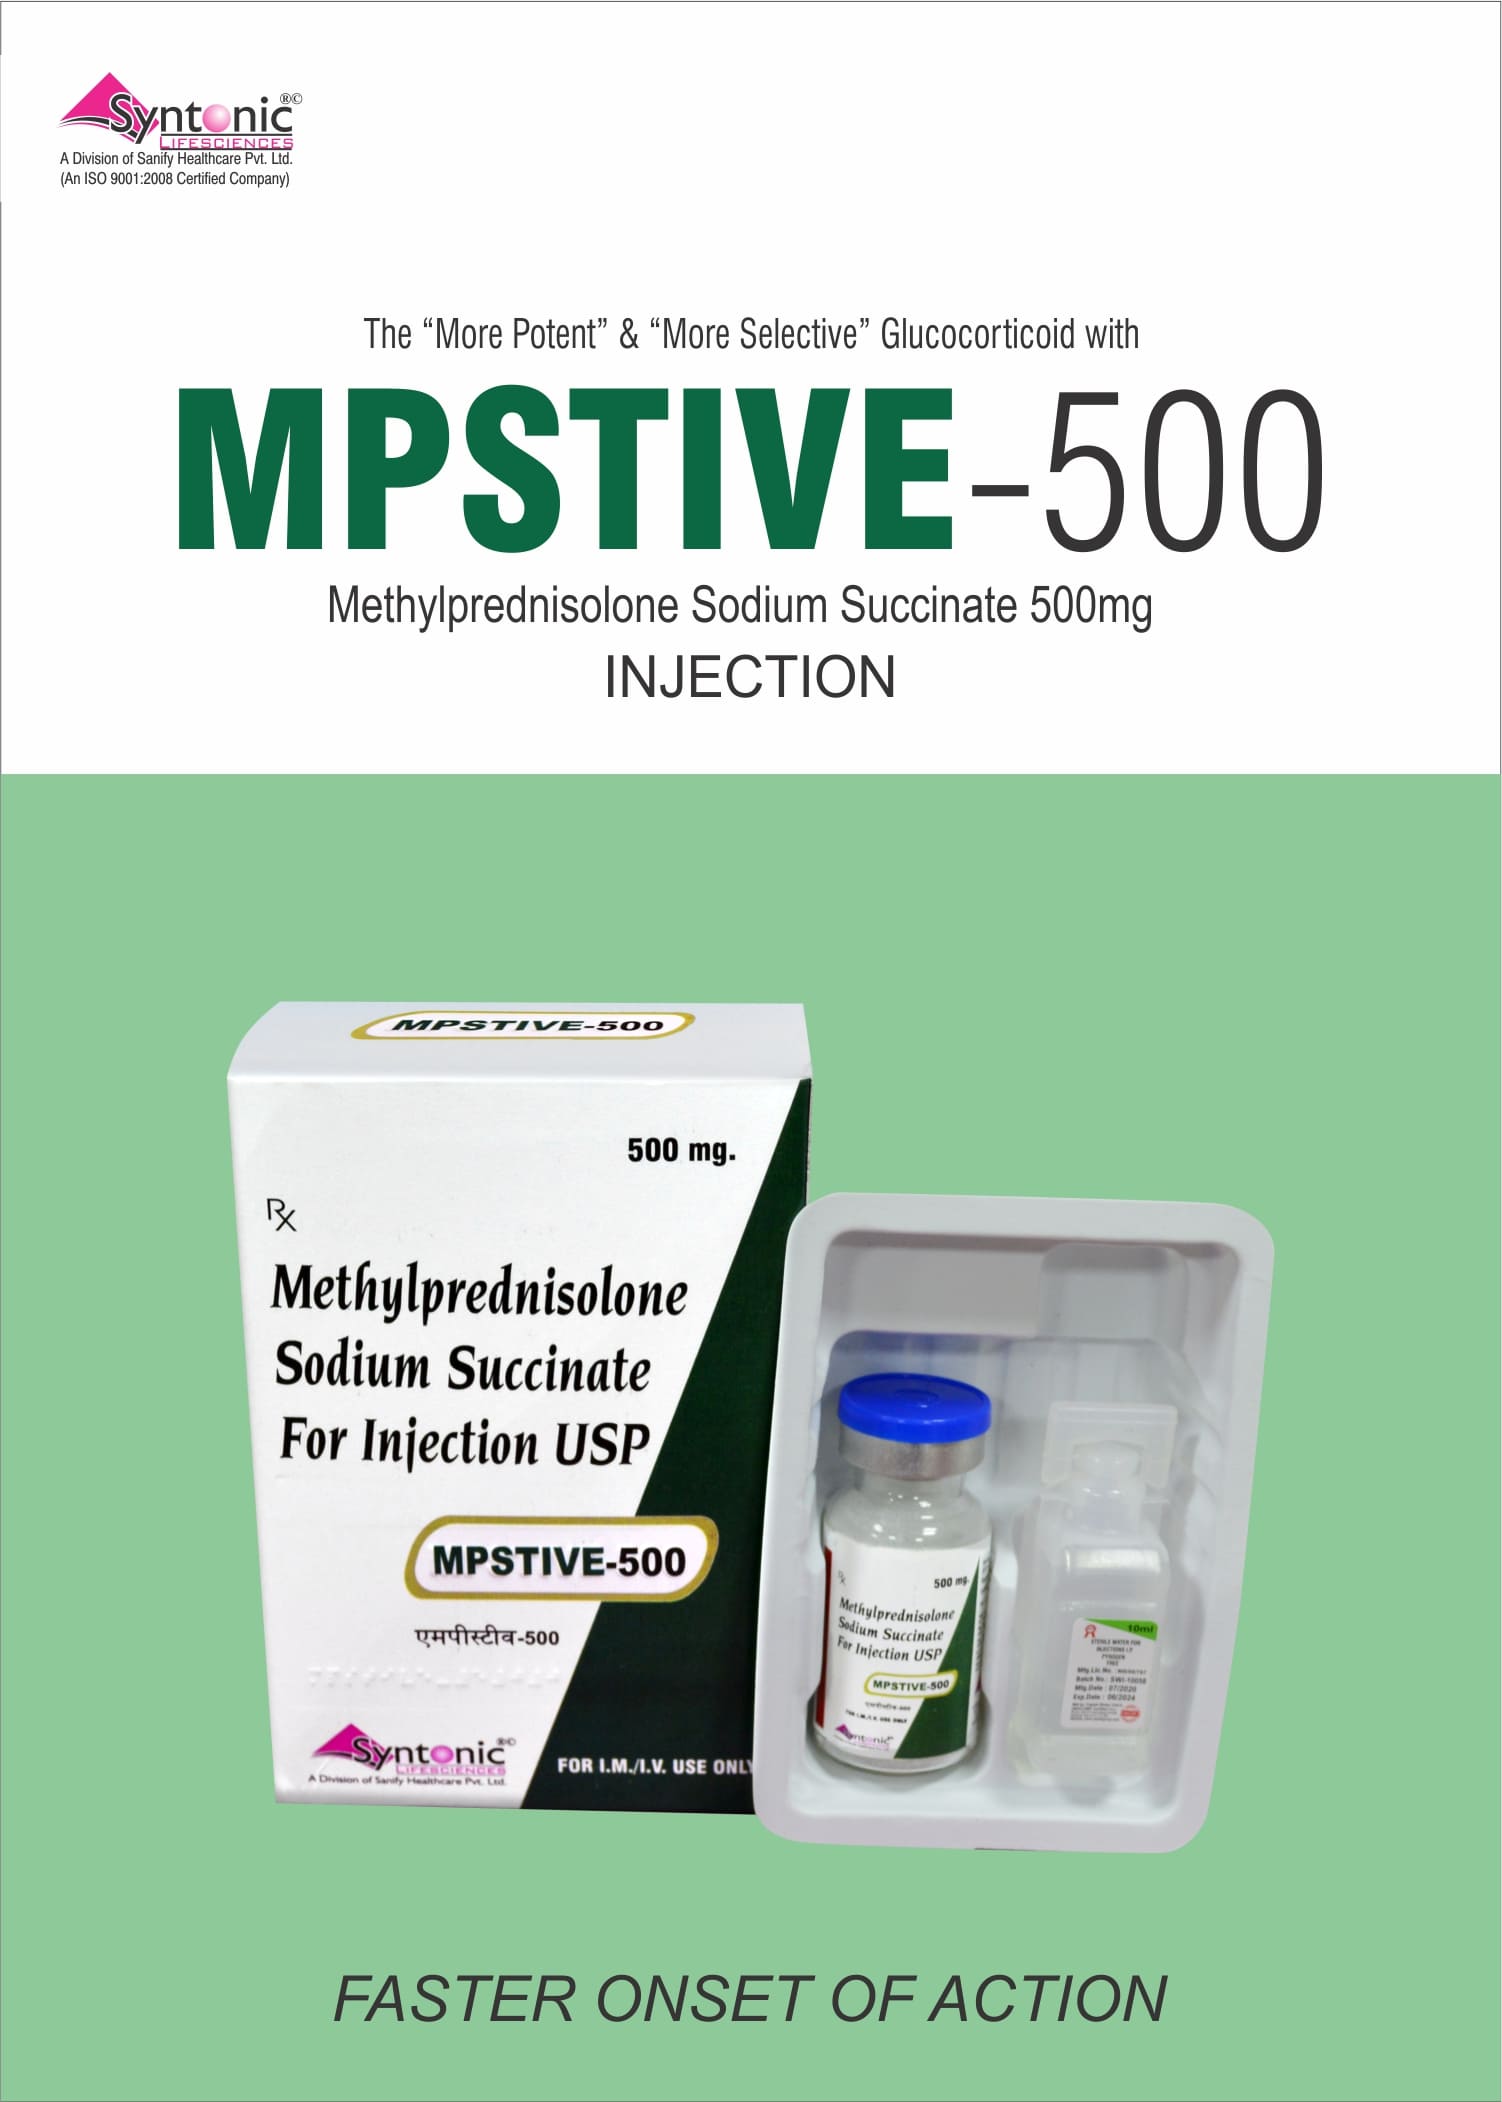 Methylprednisolone Sodium Succinate 500mg